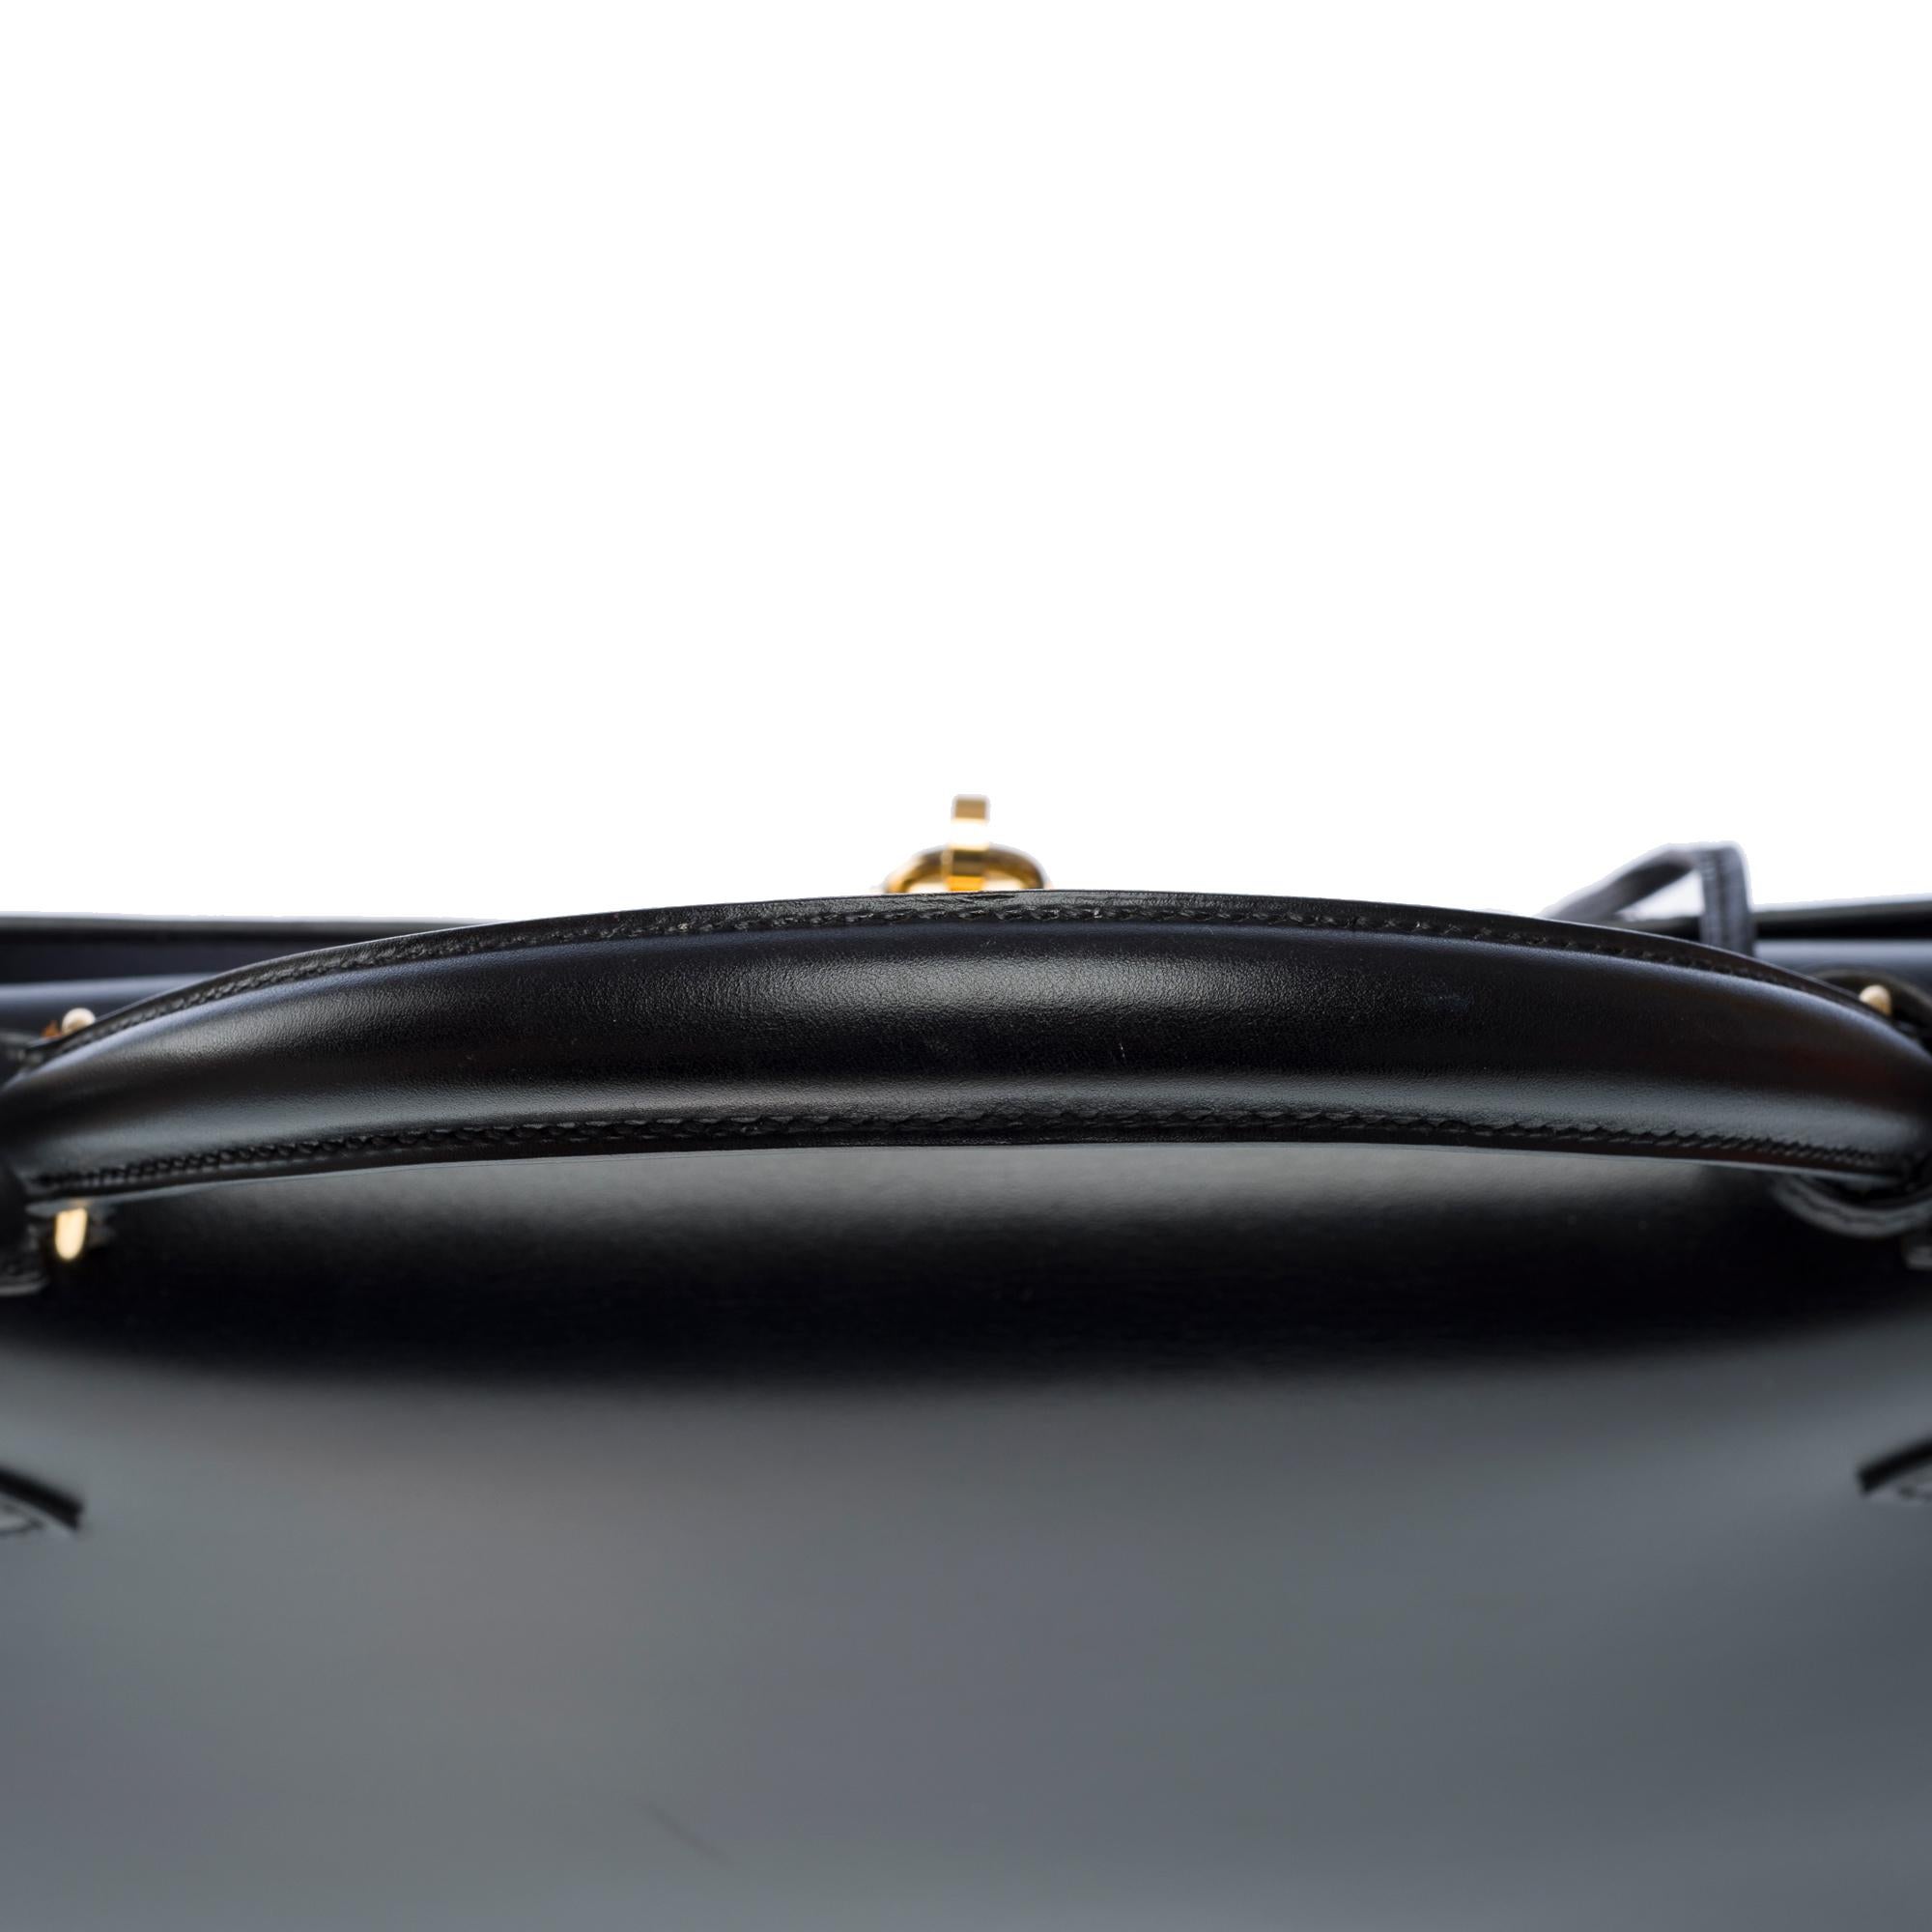 Stunning Hermès Kelly 32 sellier handbag strap in Black Box Calf leather, GHW For Sale 6